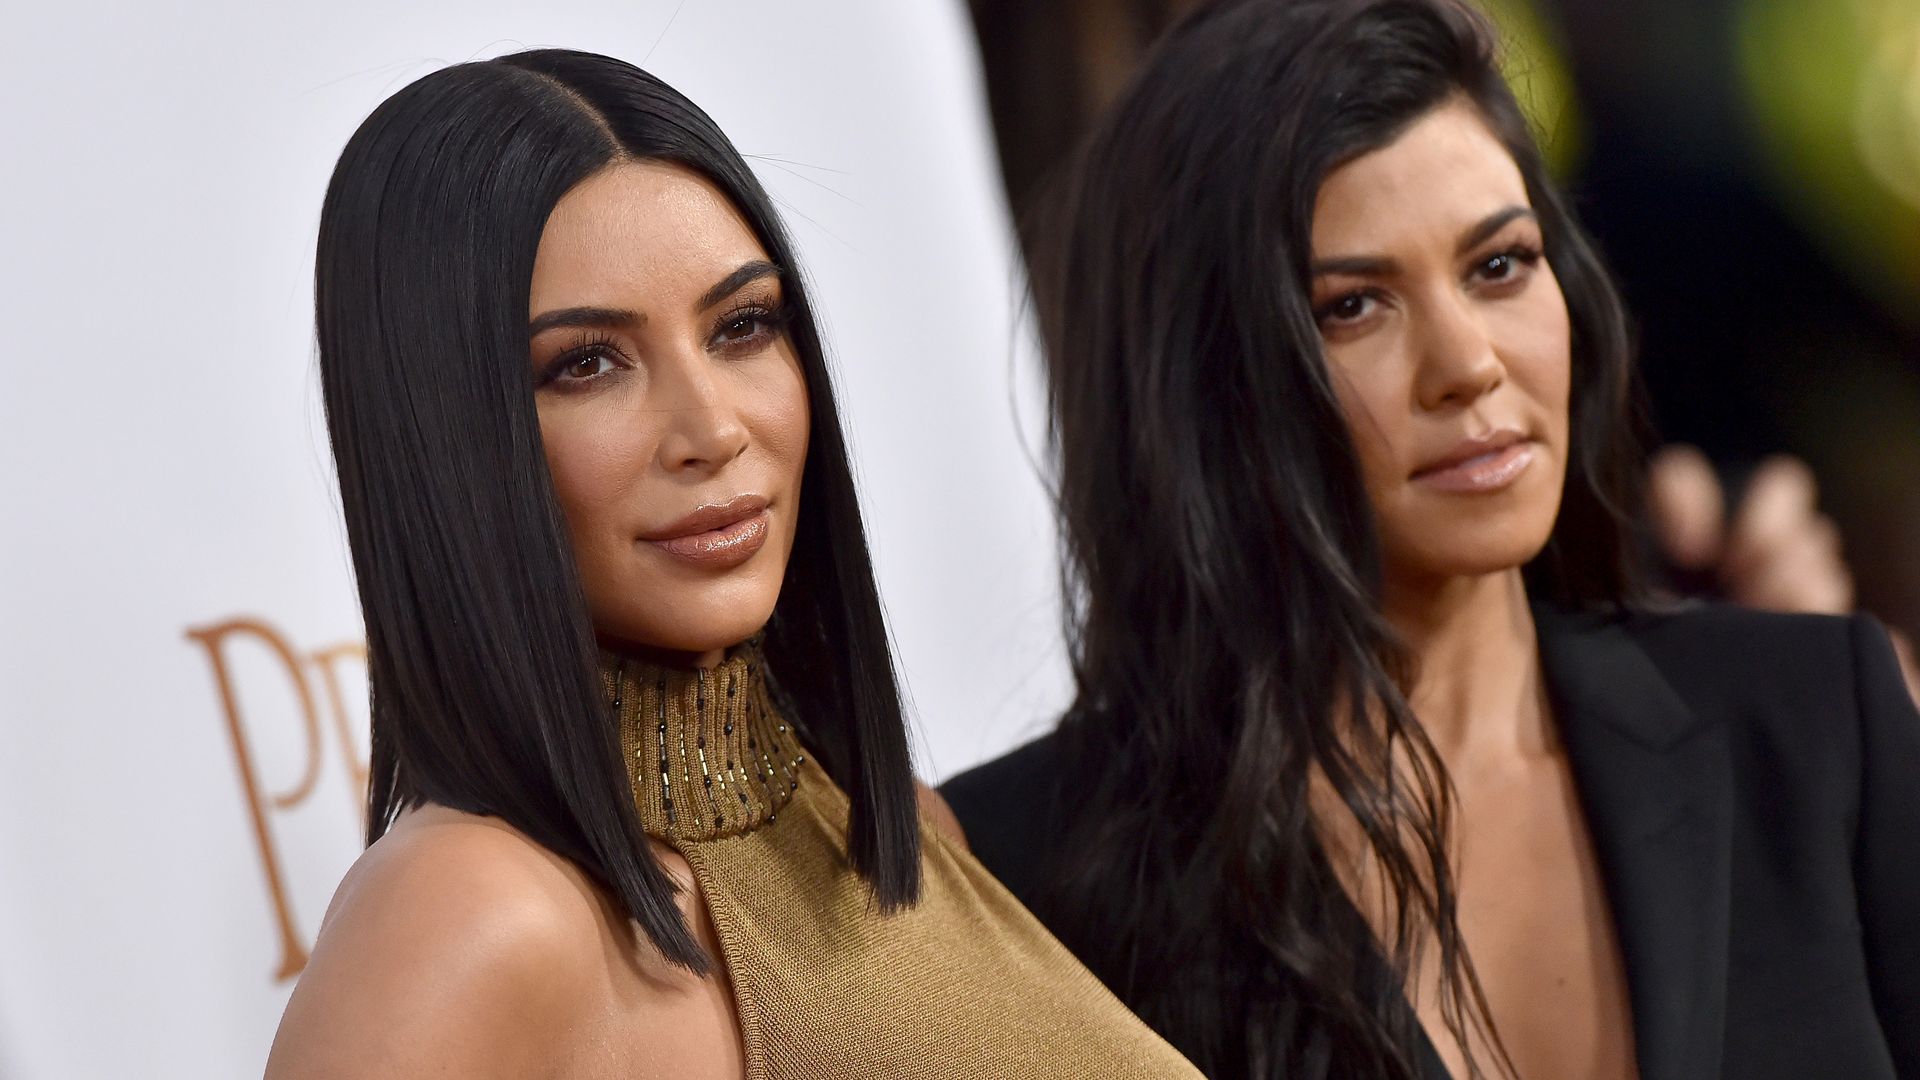 The real reason behind Kim and Kourtney Kardashian's ongoing feud